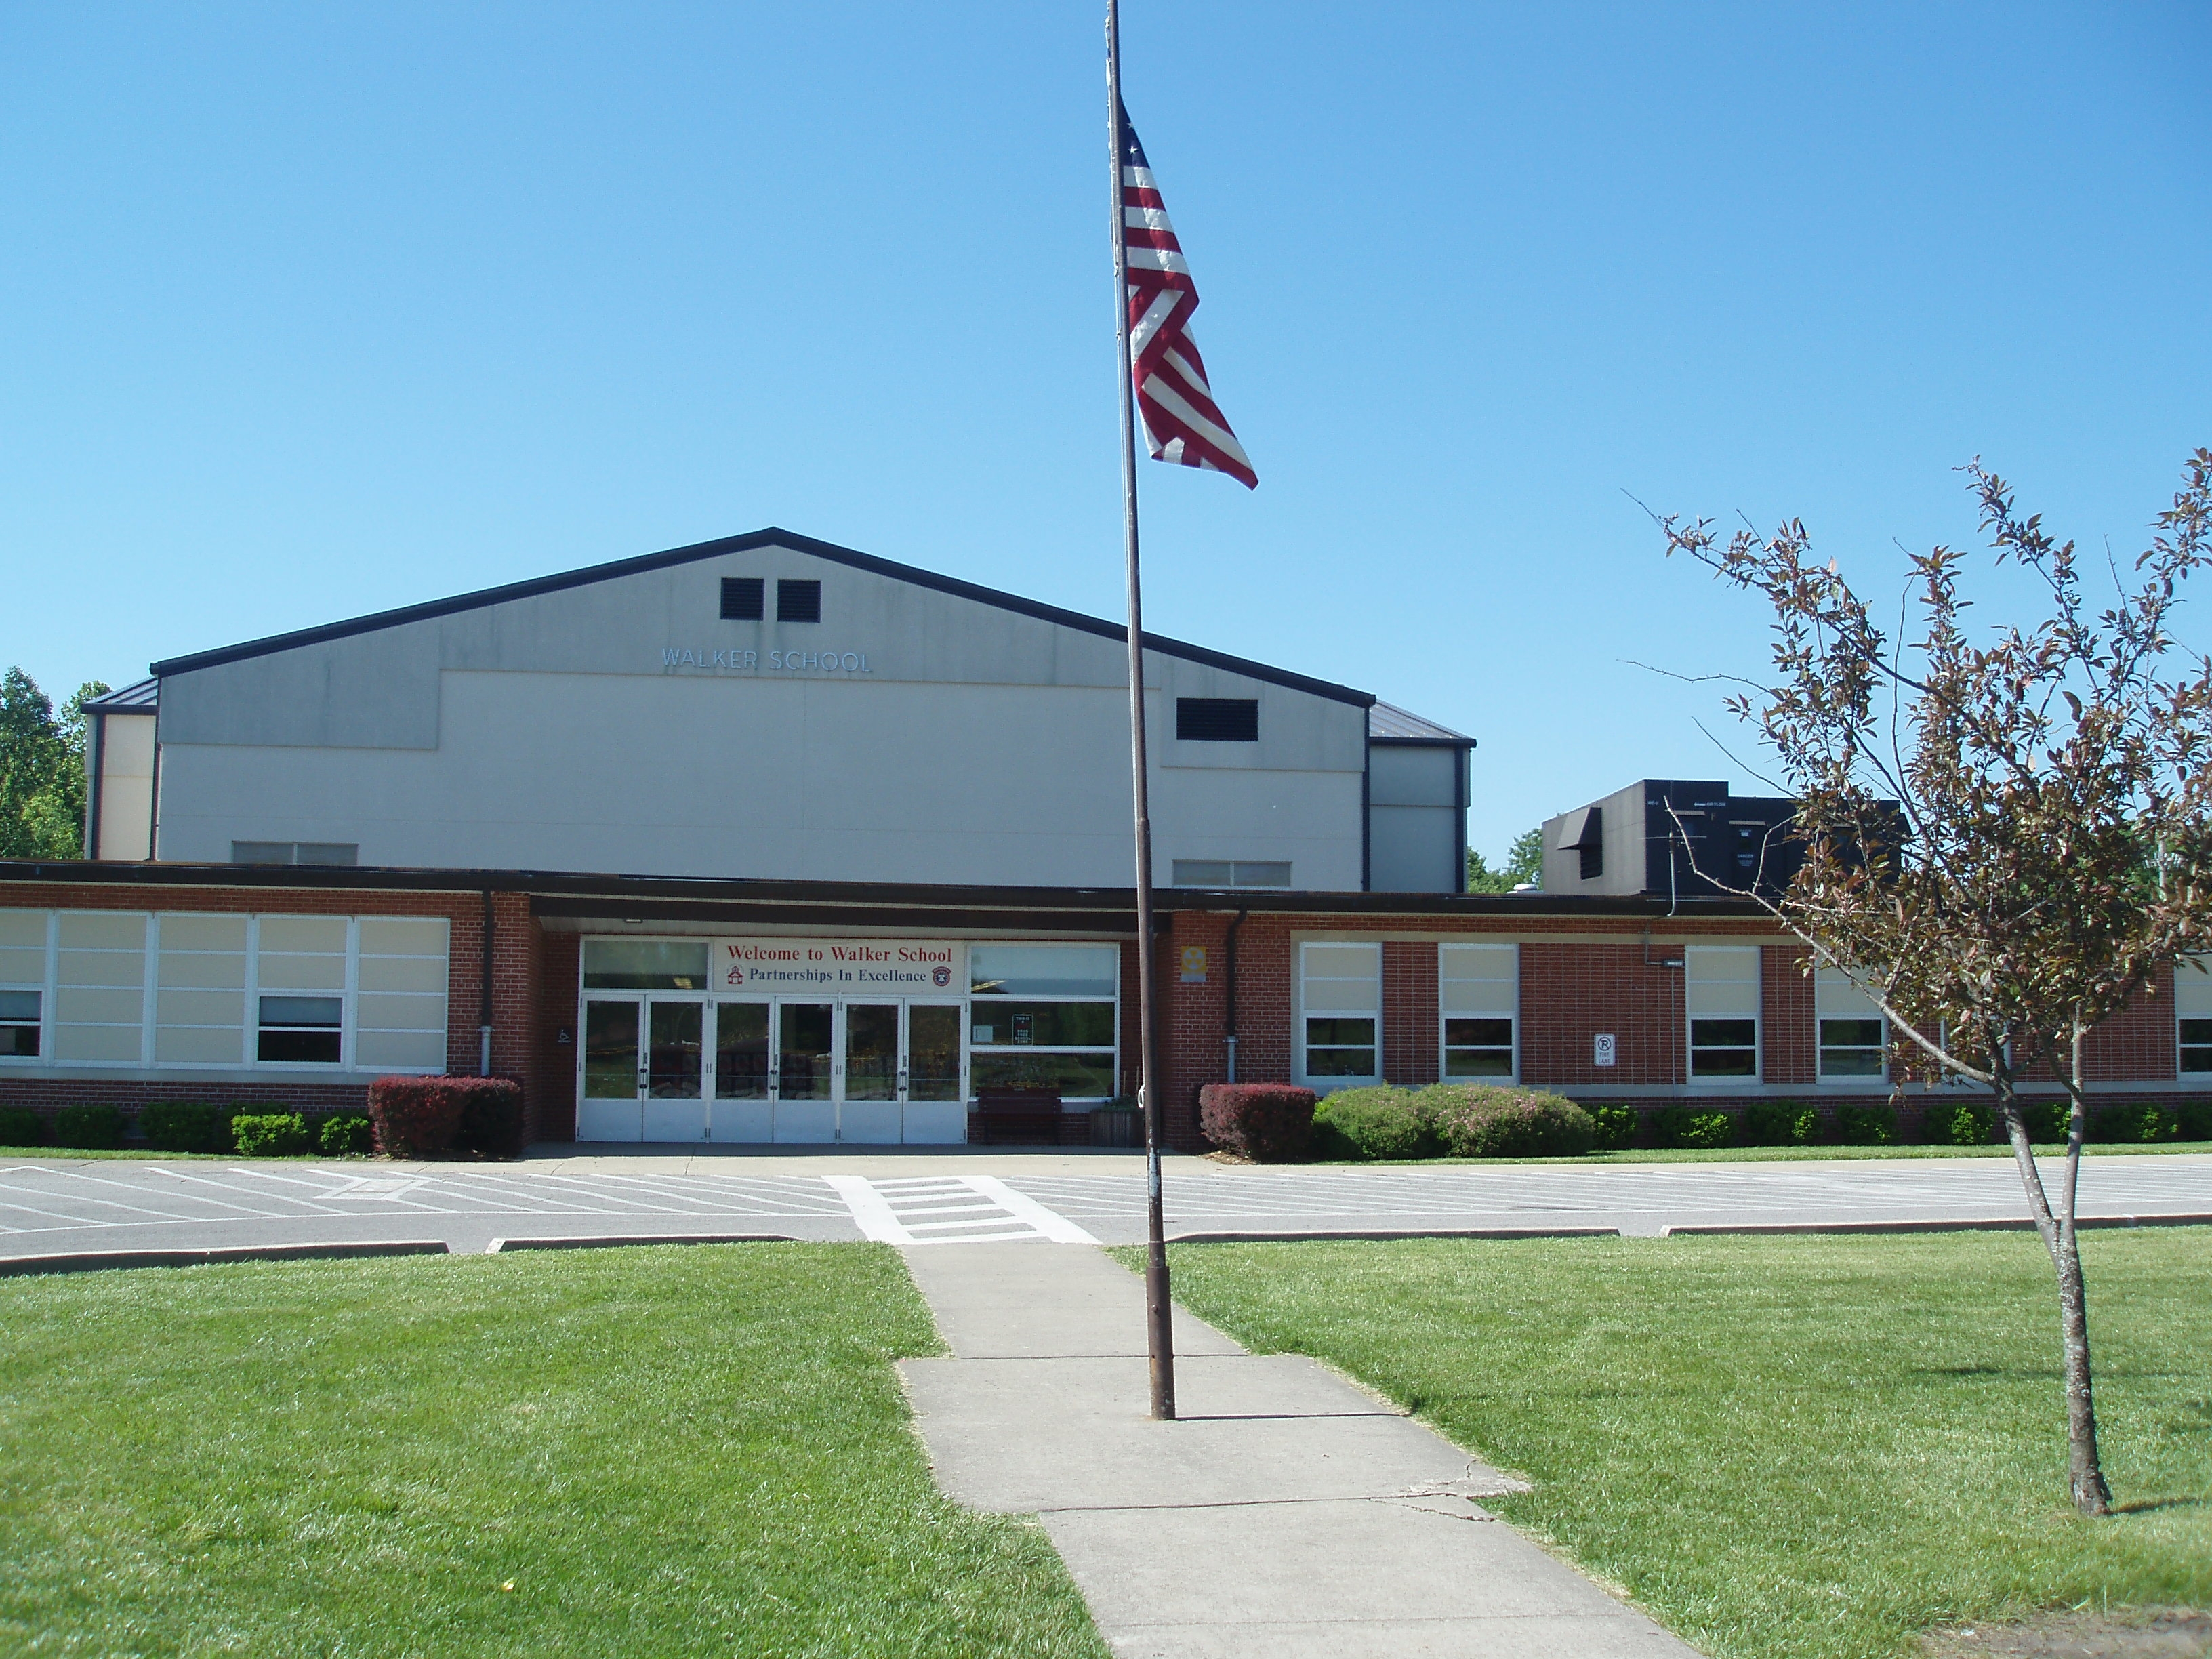 View of Front Entrance of Walker School